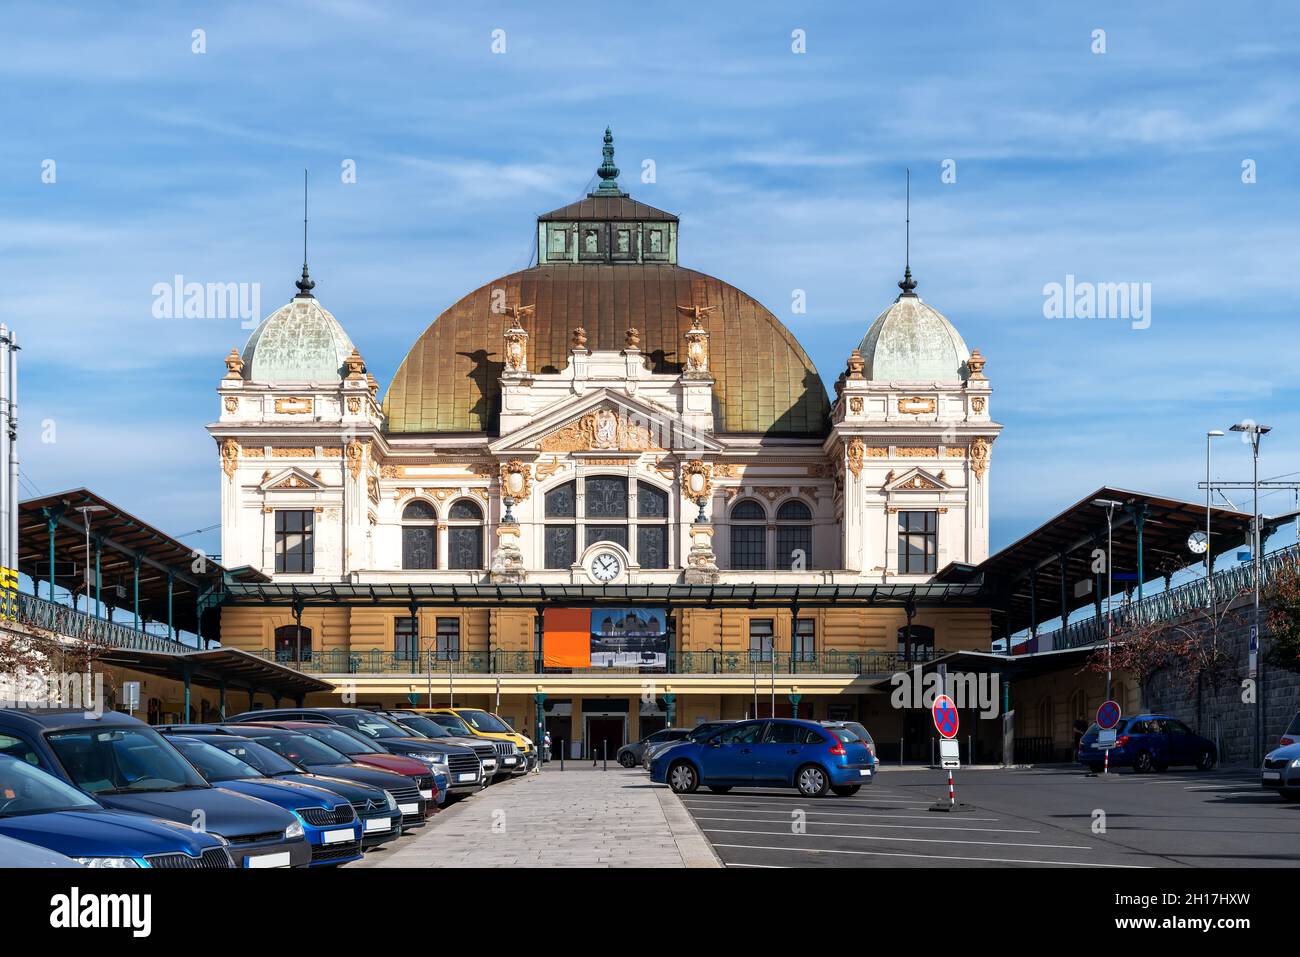 Main Railway Station building in Pilsen city, Czech Republic Stock Photo